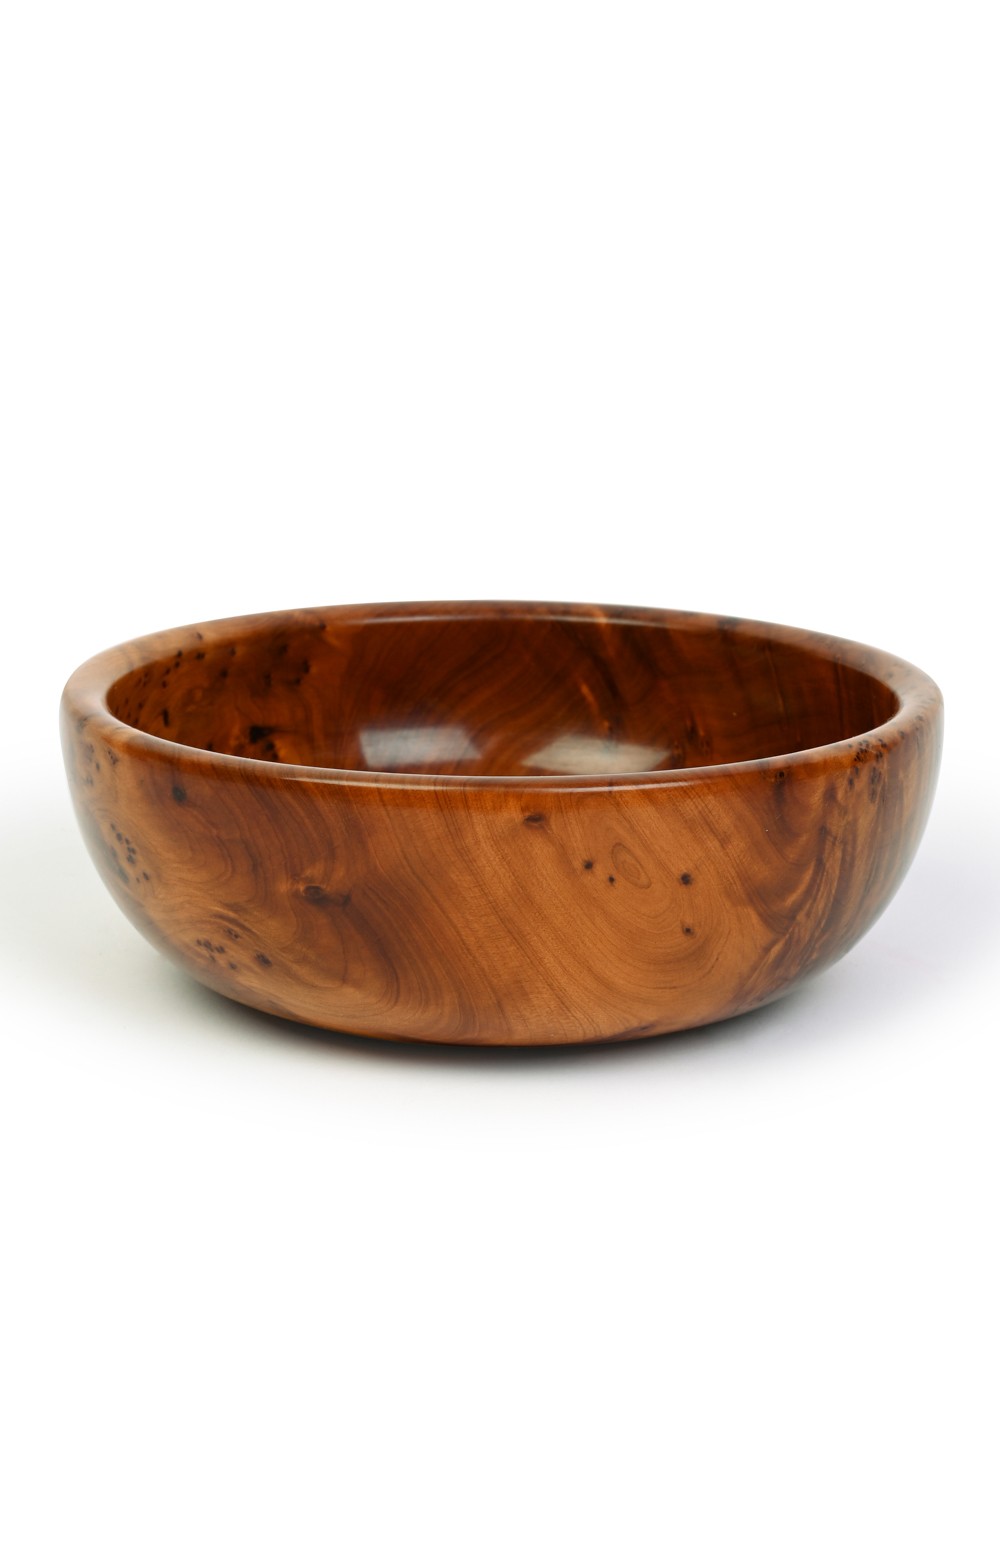  Large Wooden Bowl, Thuyawood